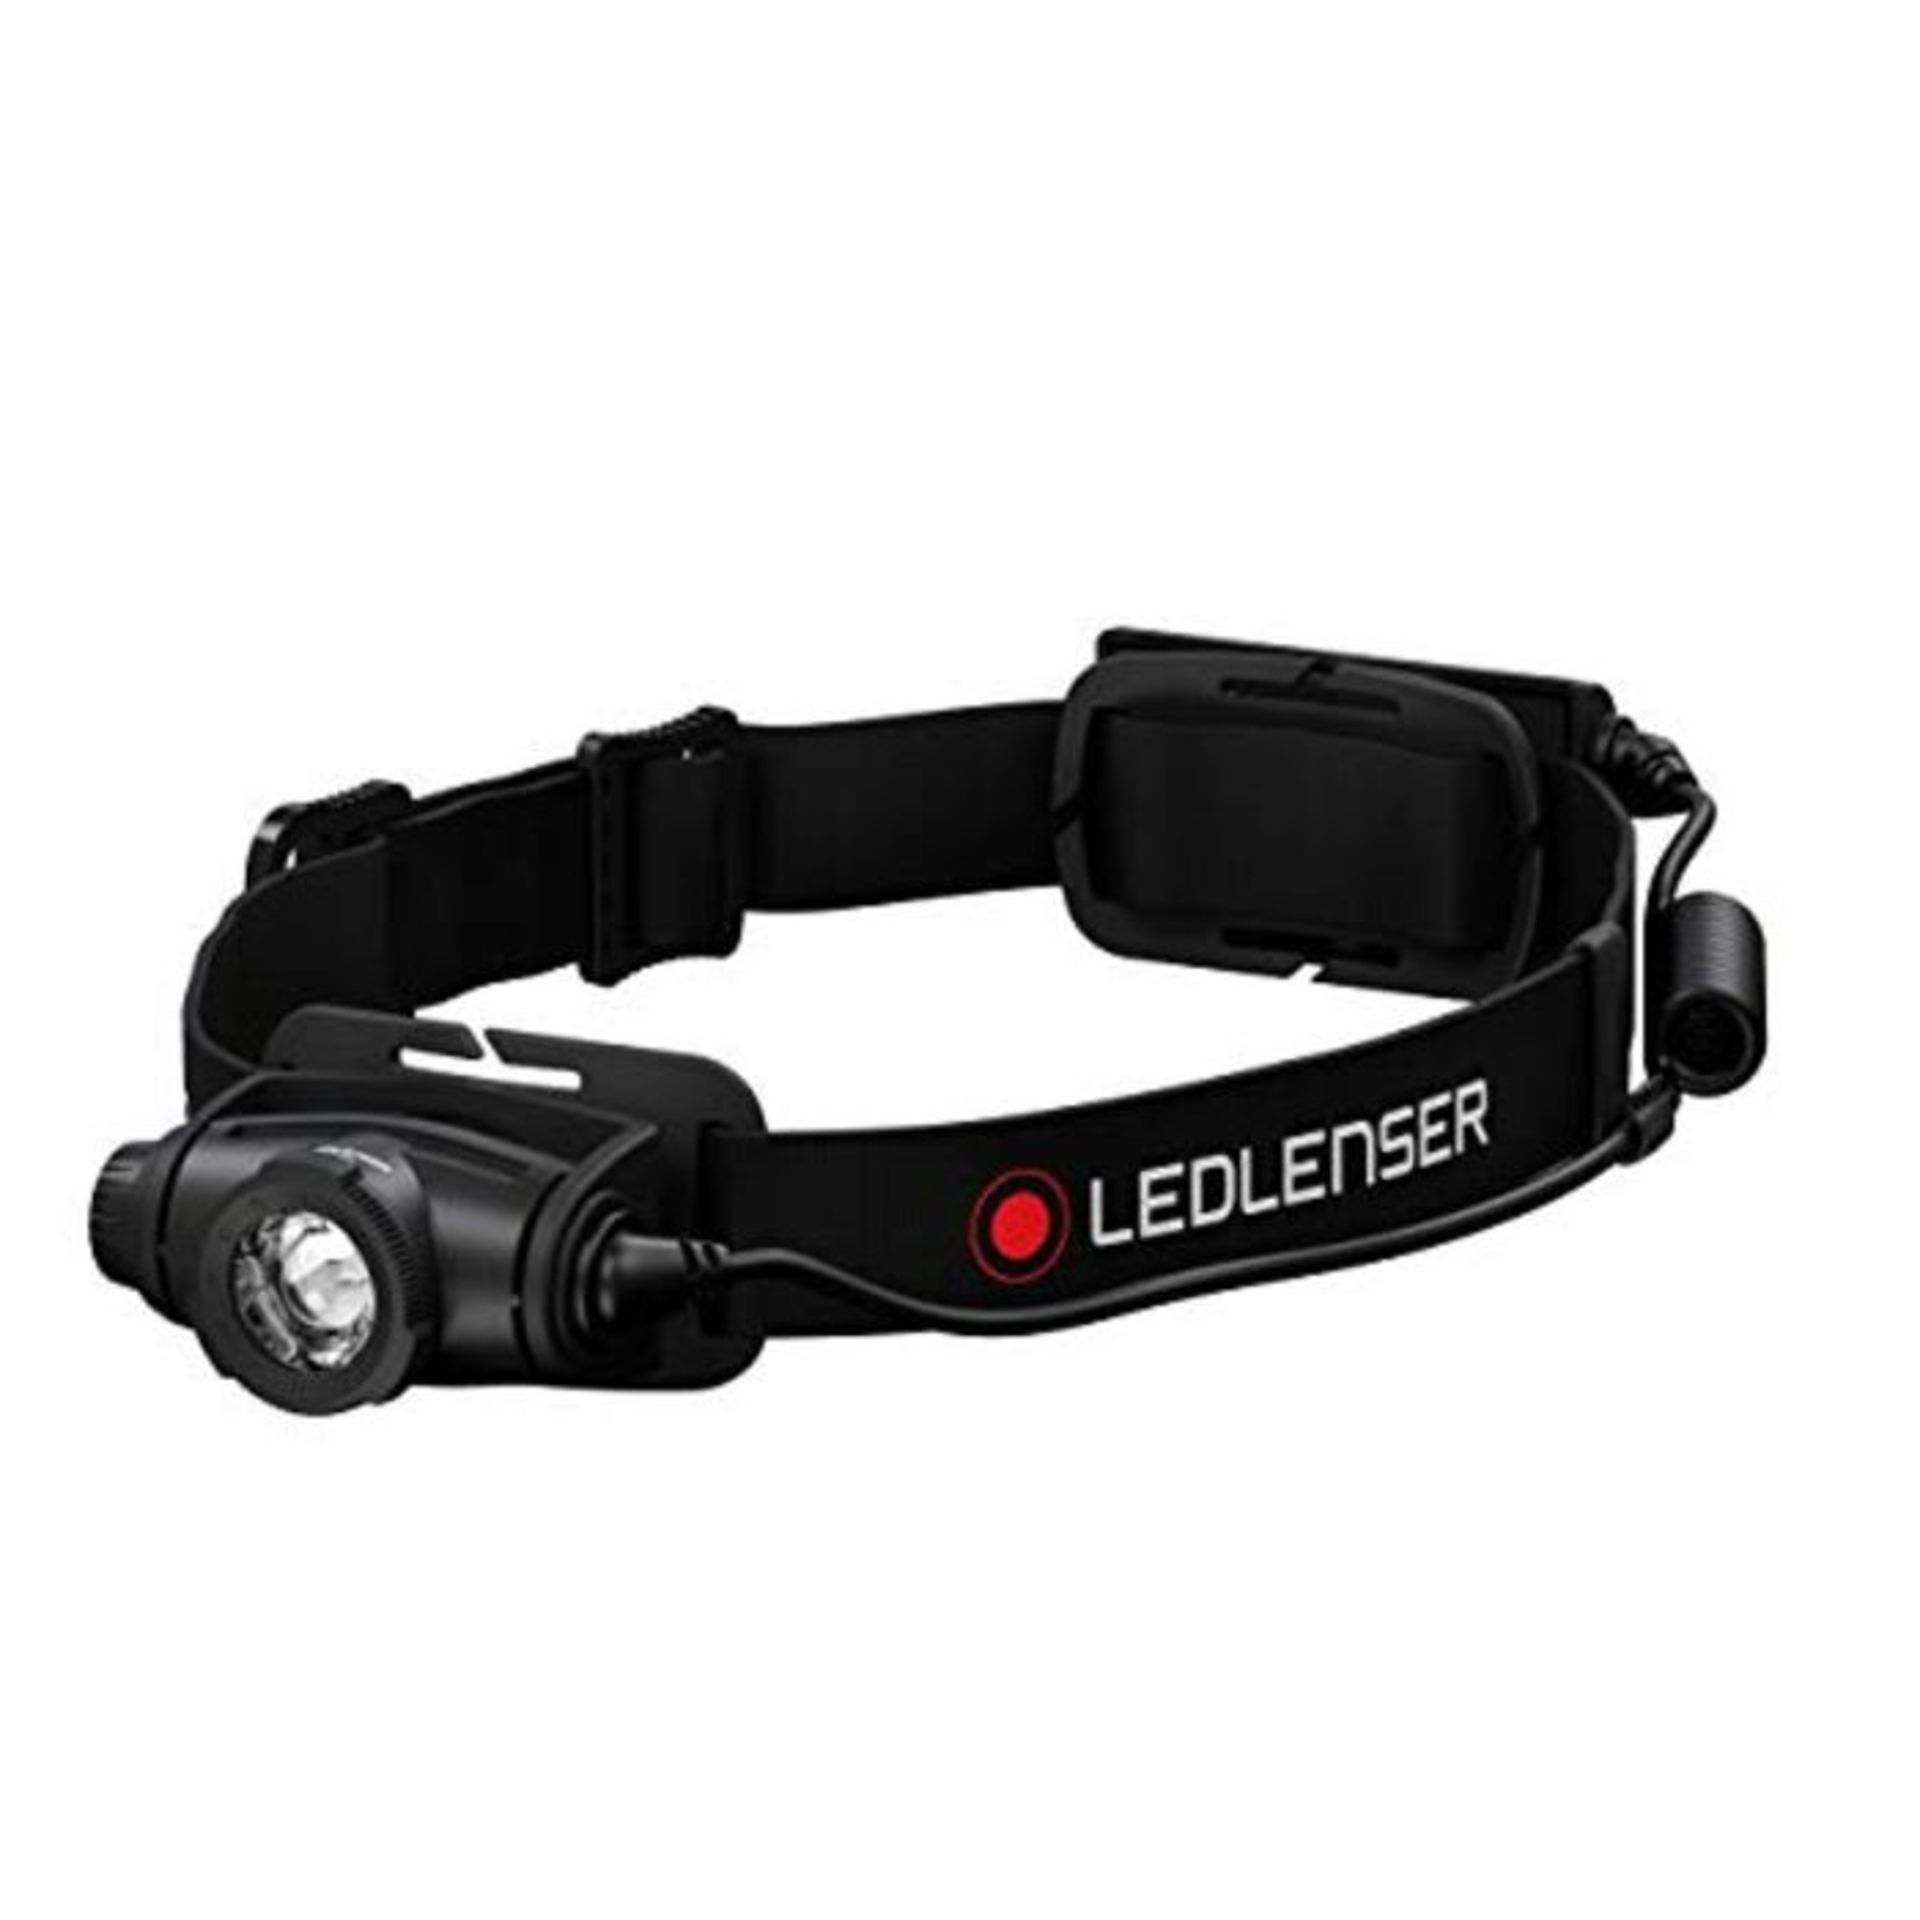 Ledlenser, H5R Core, Stirnlampe LED, leistungsstarke und kompakte Kopflampe, 500 Lumen